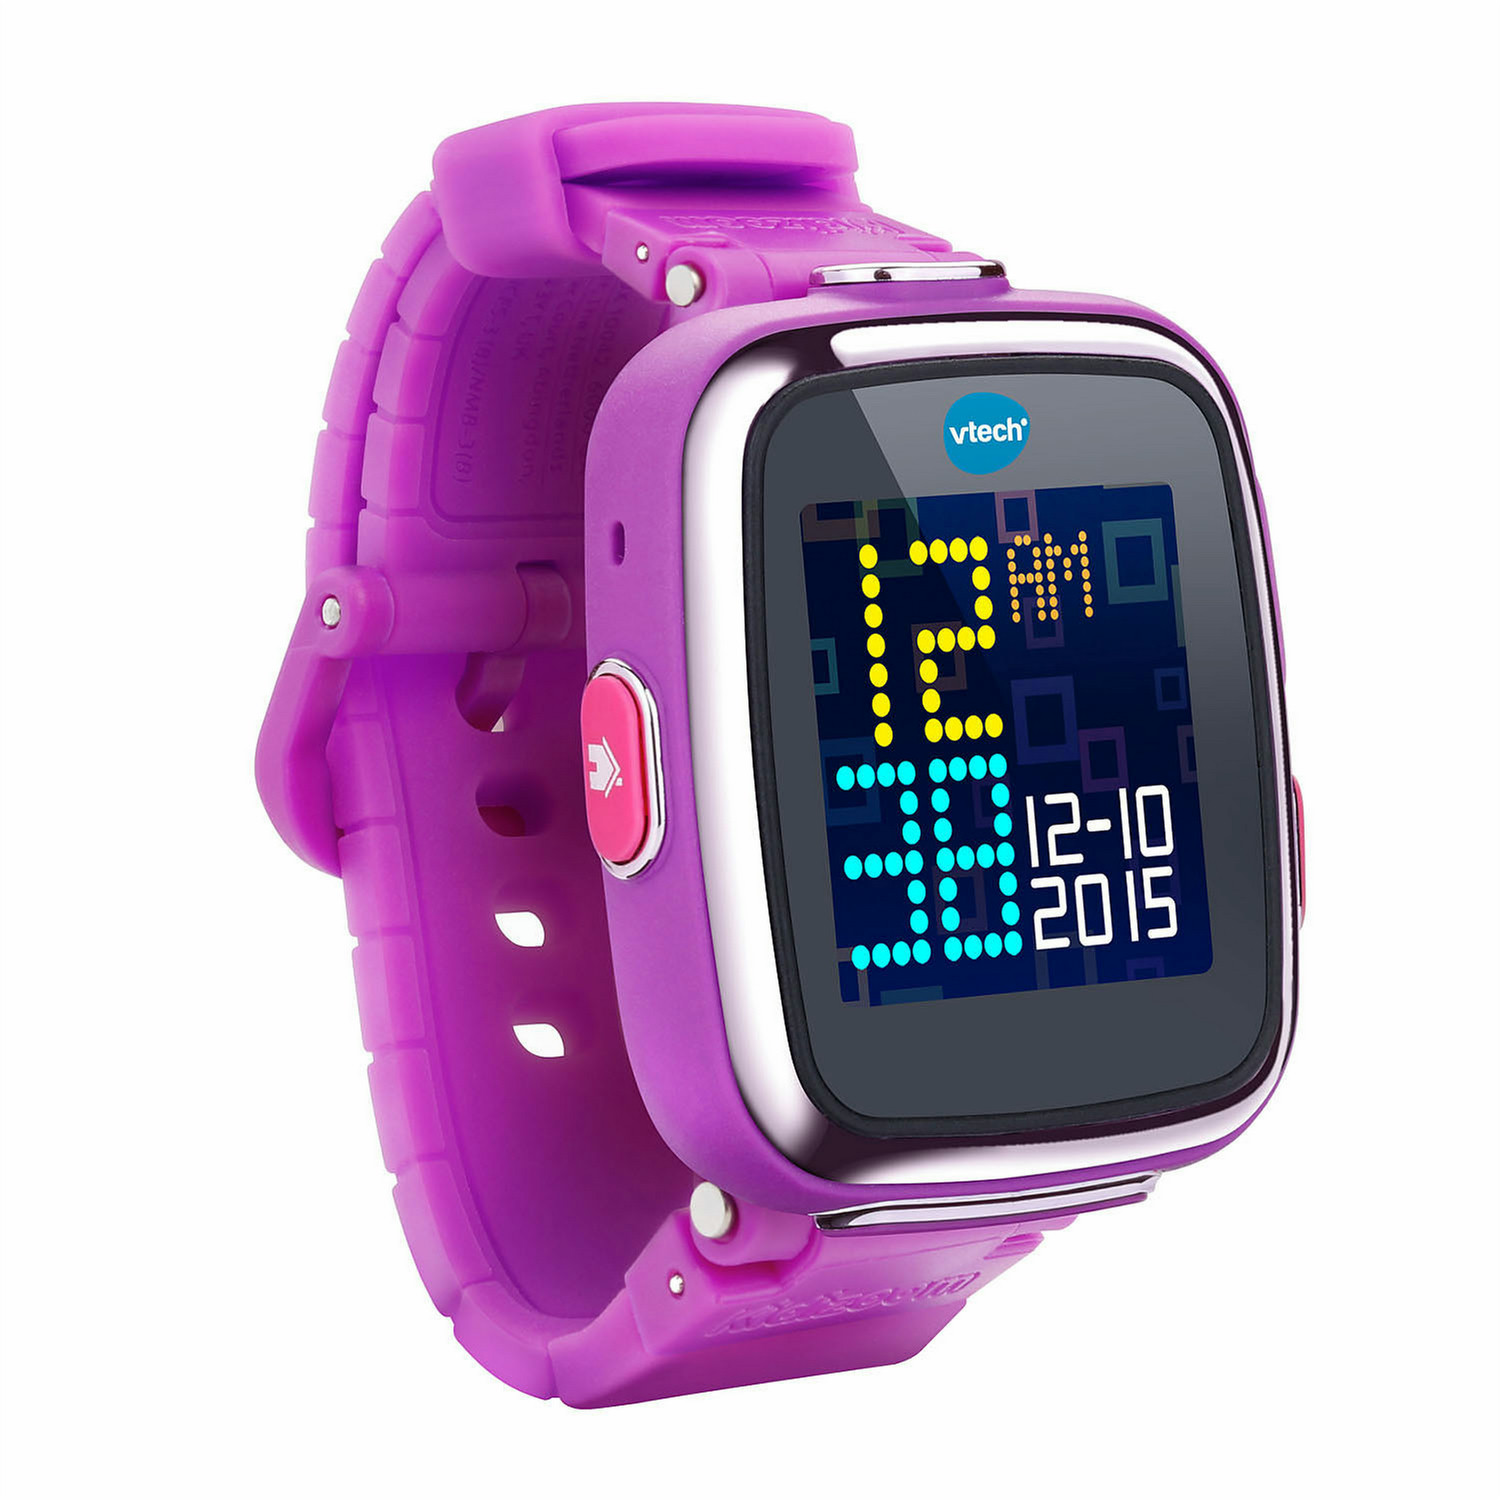 vtech kidizoom smartwatch dx smart watches